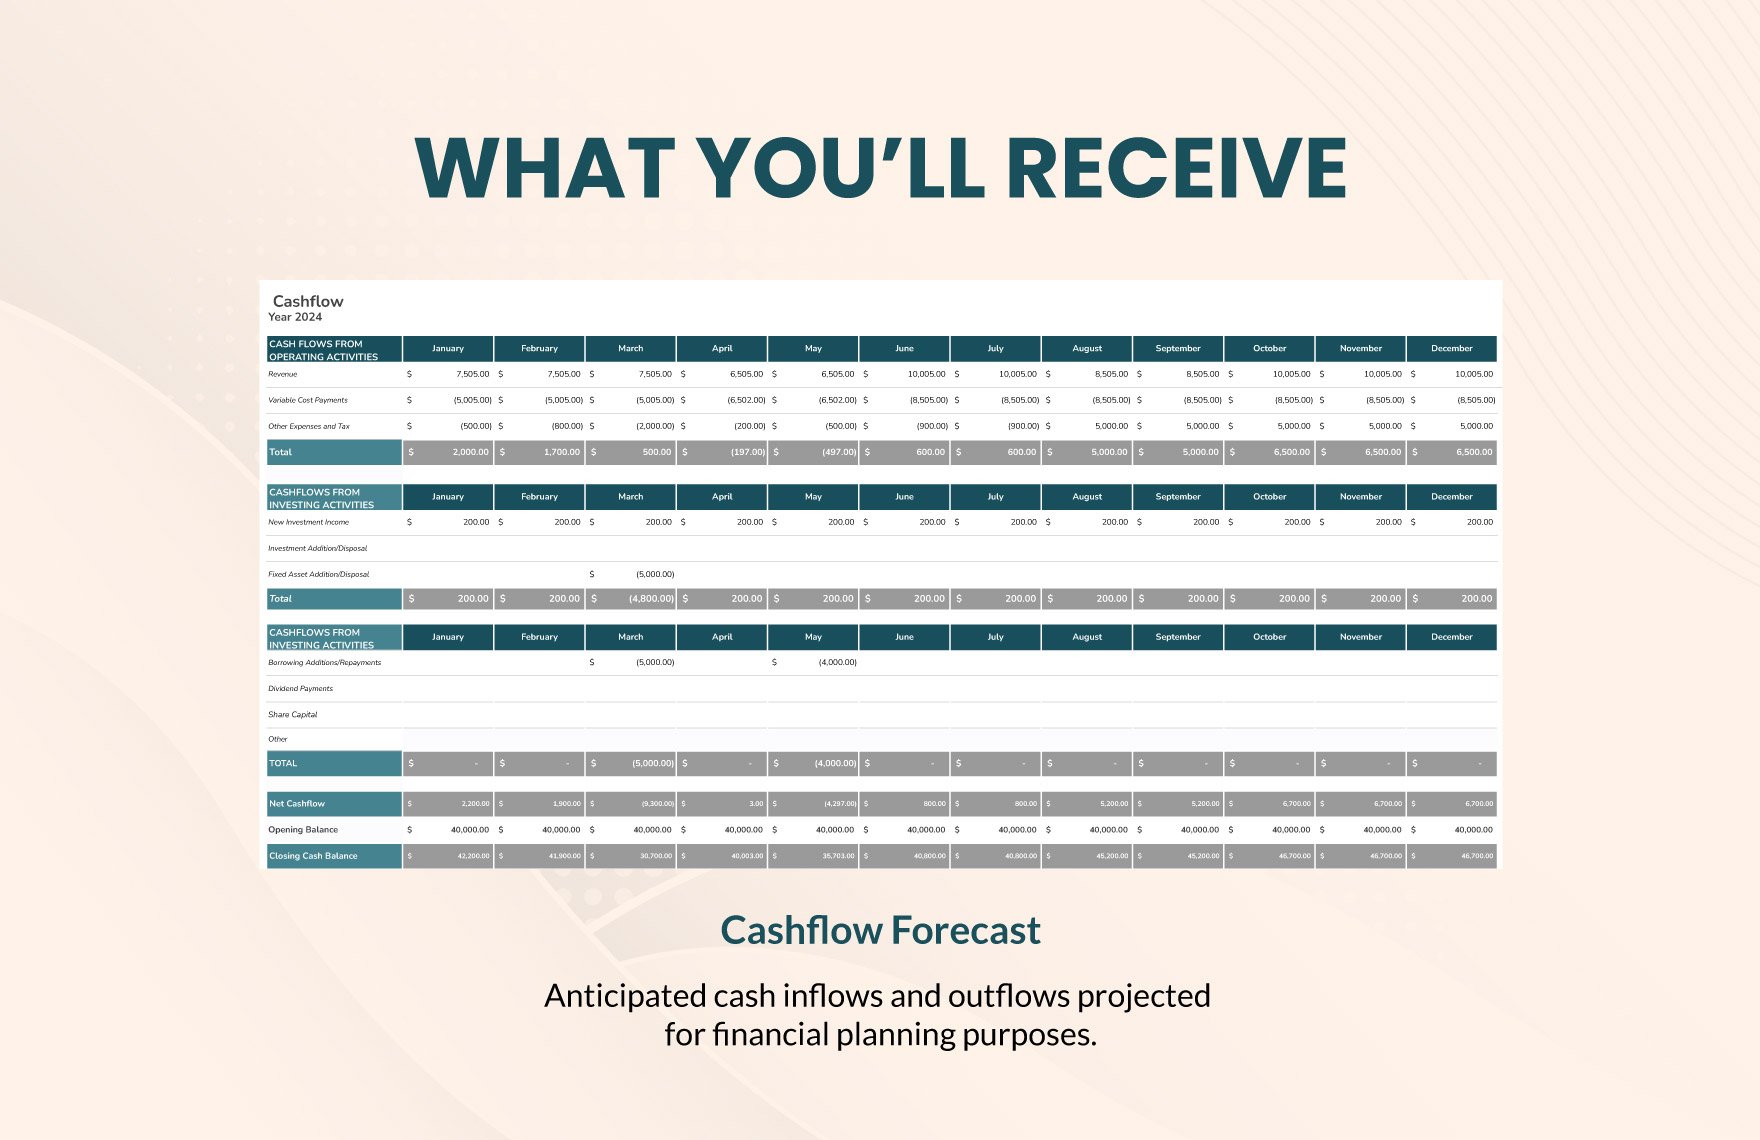 Rolling Cashflow Forecast Template